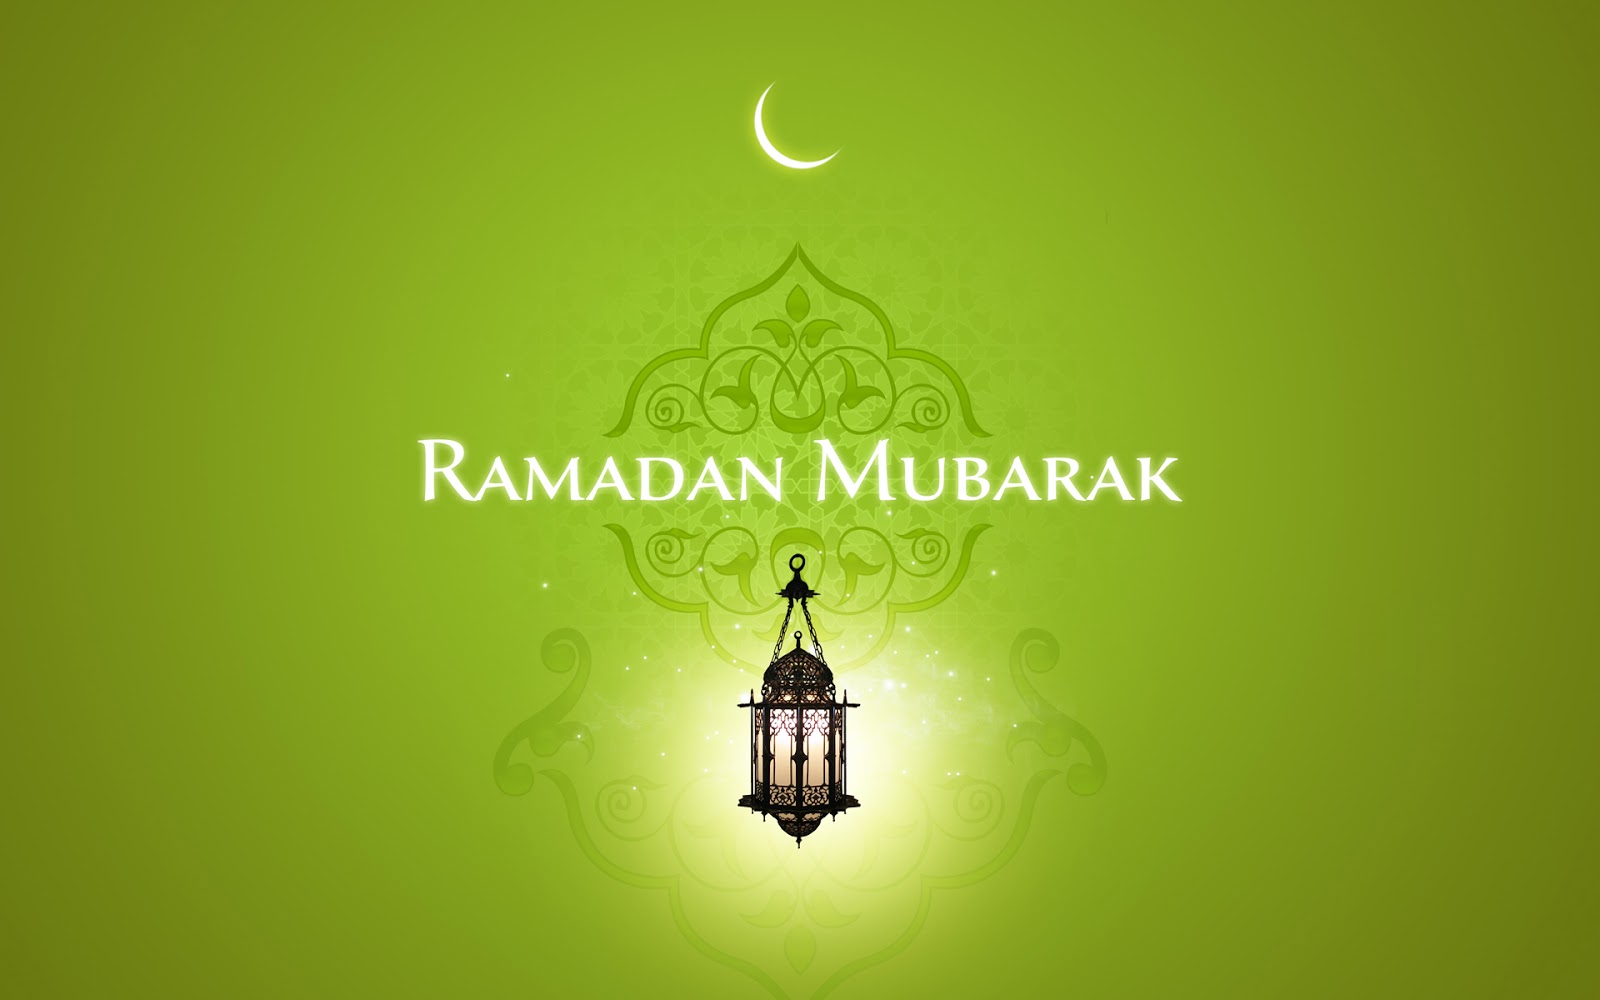  Download  Free  HD  Wallpapers  Of Ramadan  Kareem Download  